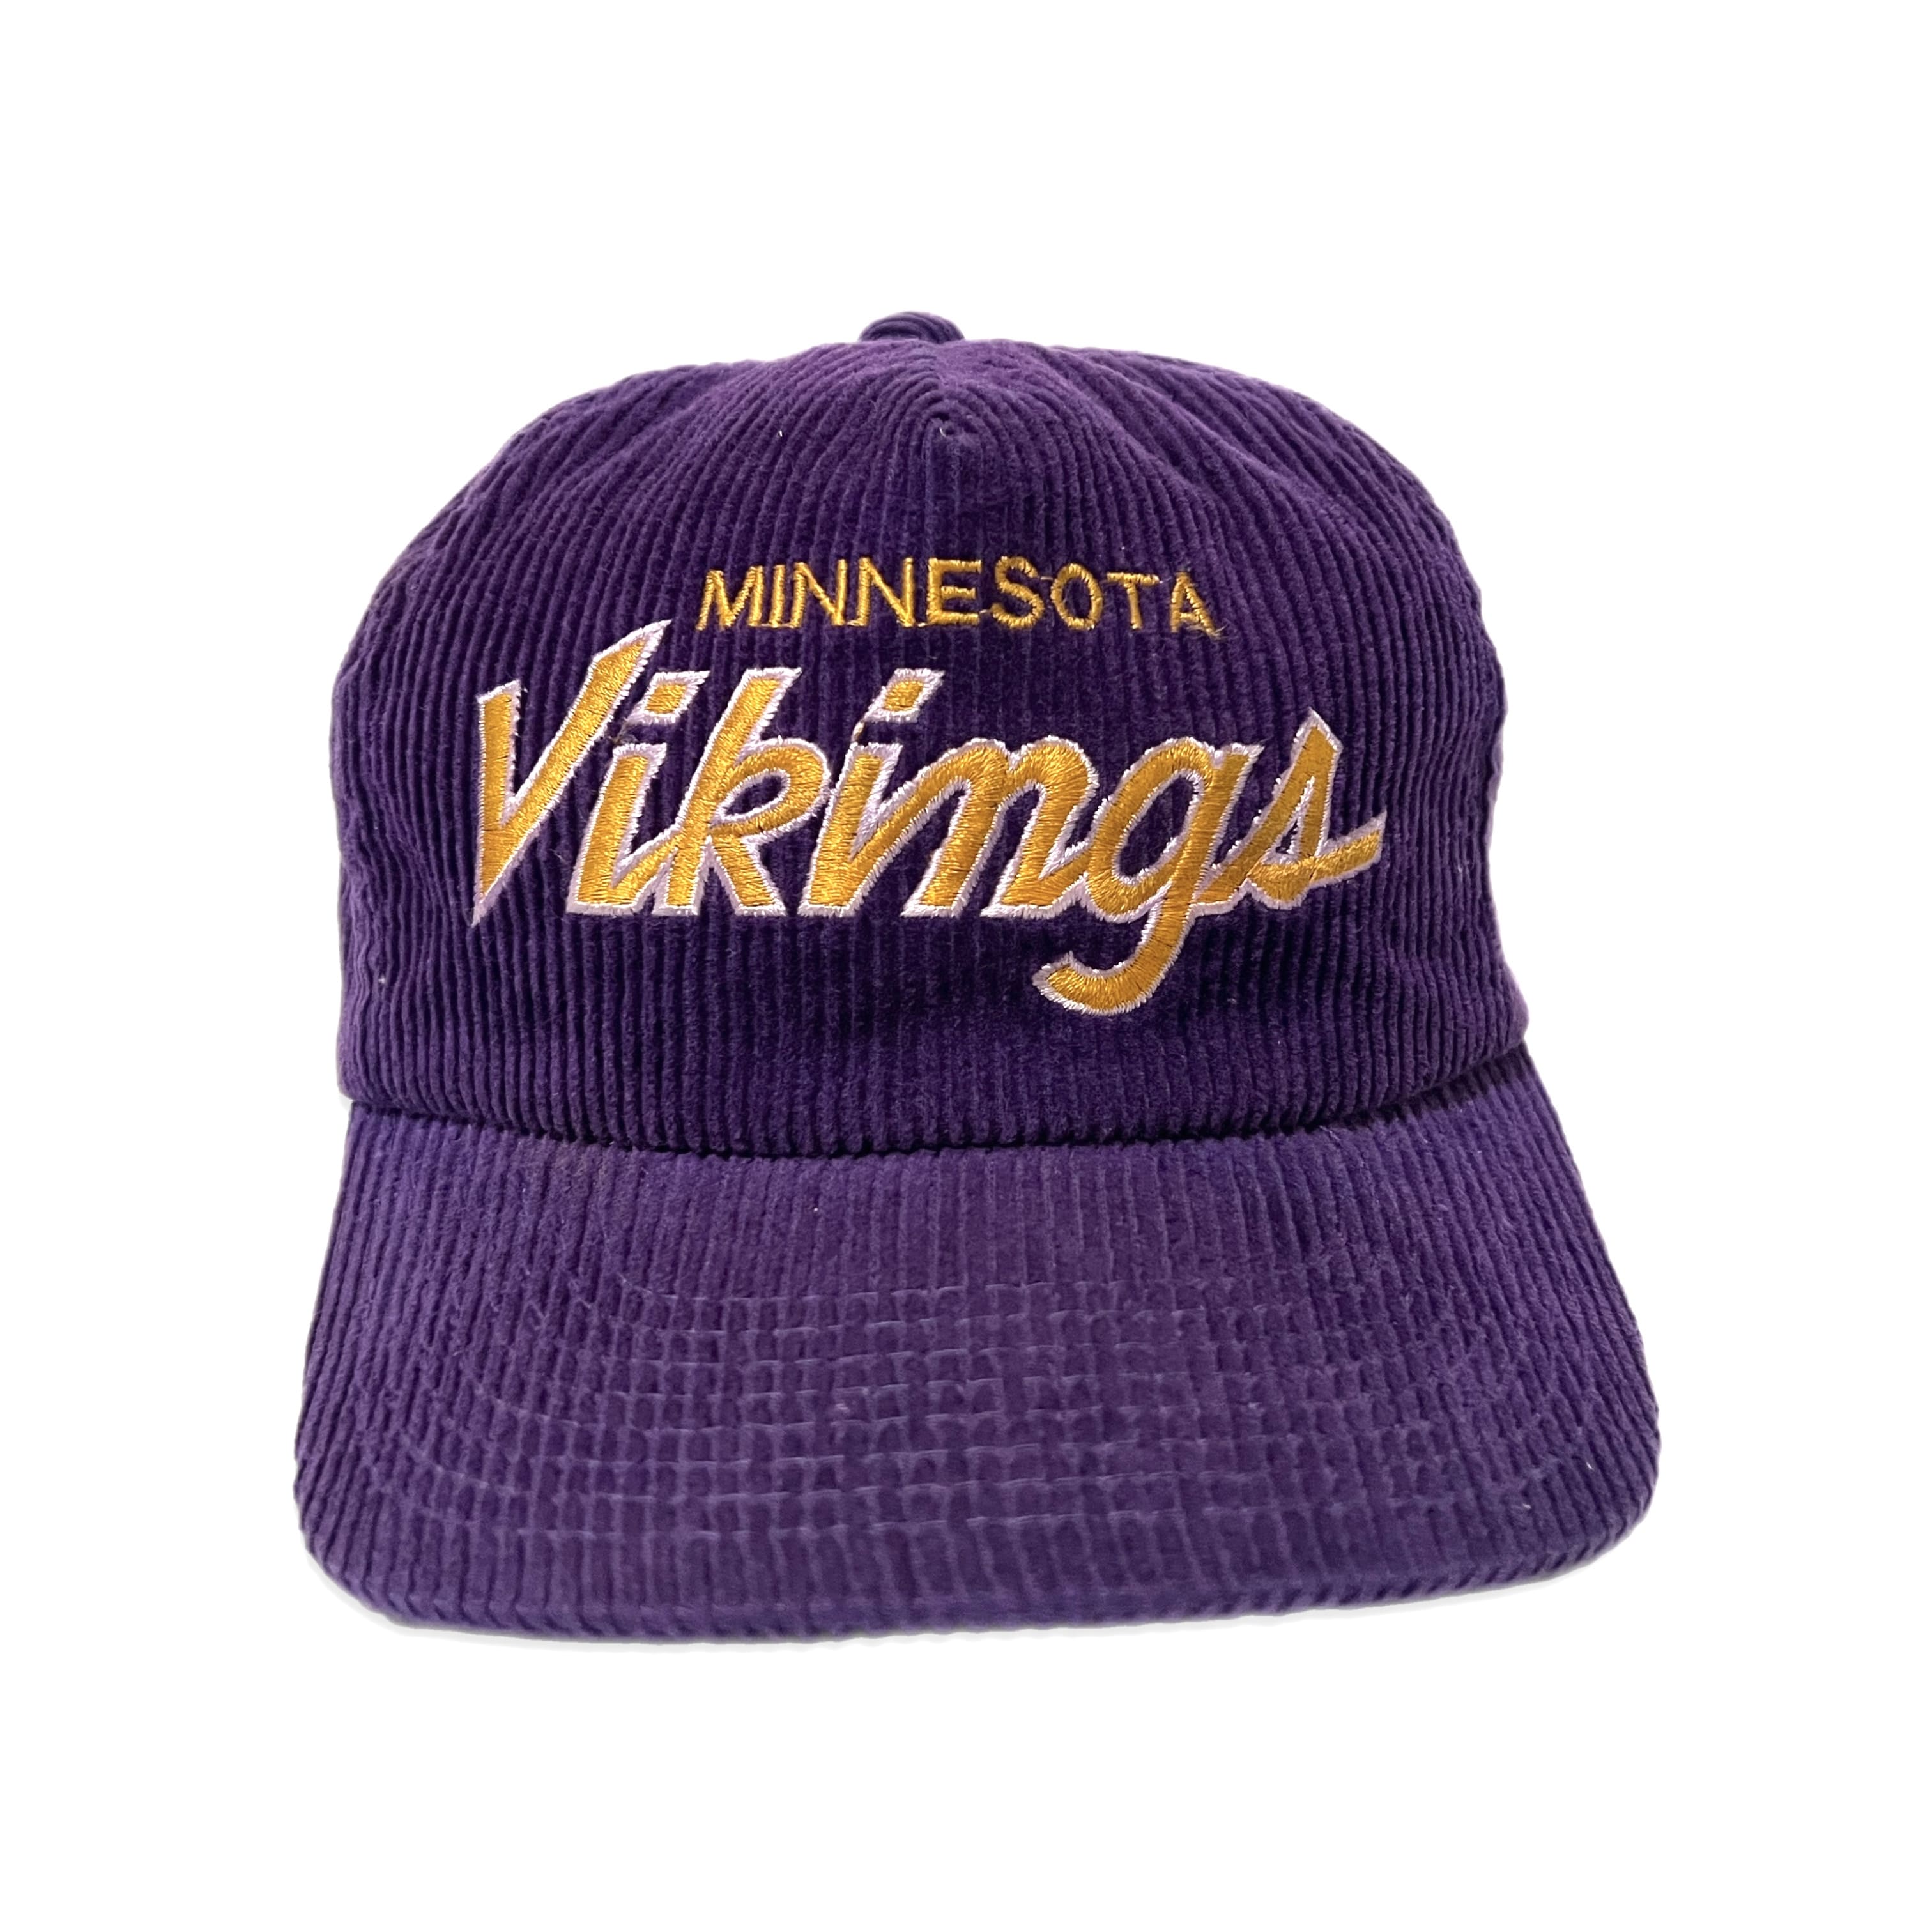 Vintage 80s/90s Los Angeles Lakers Corduroy Hat